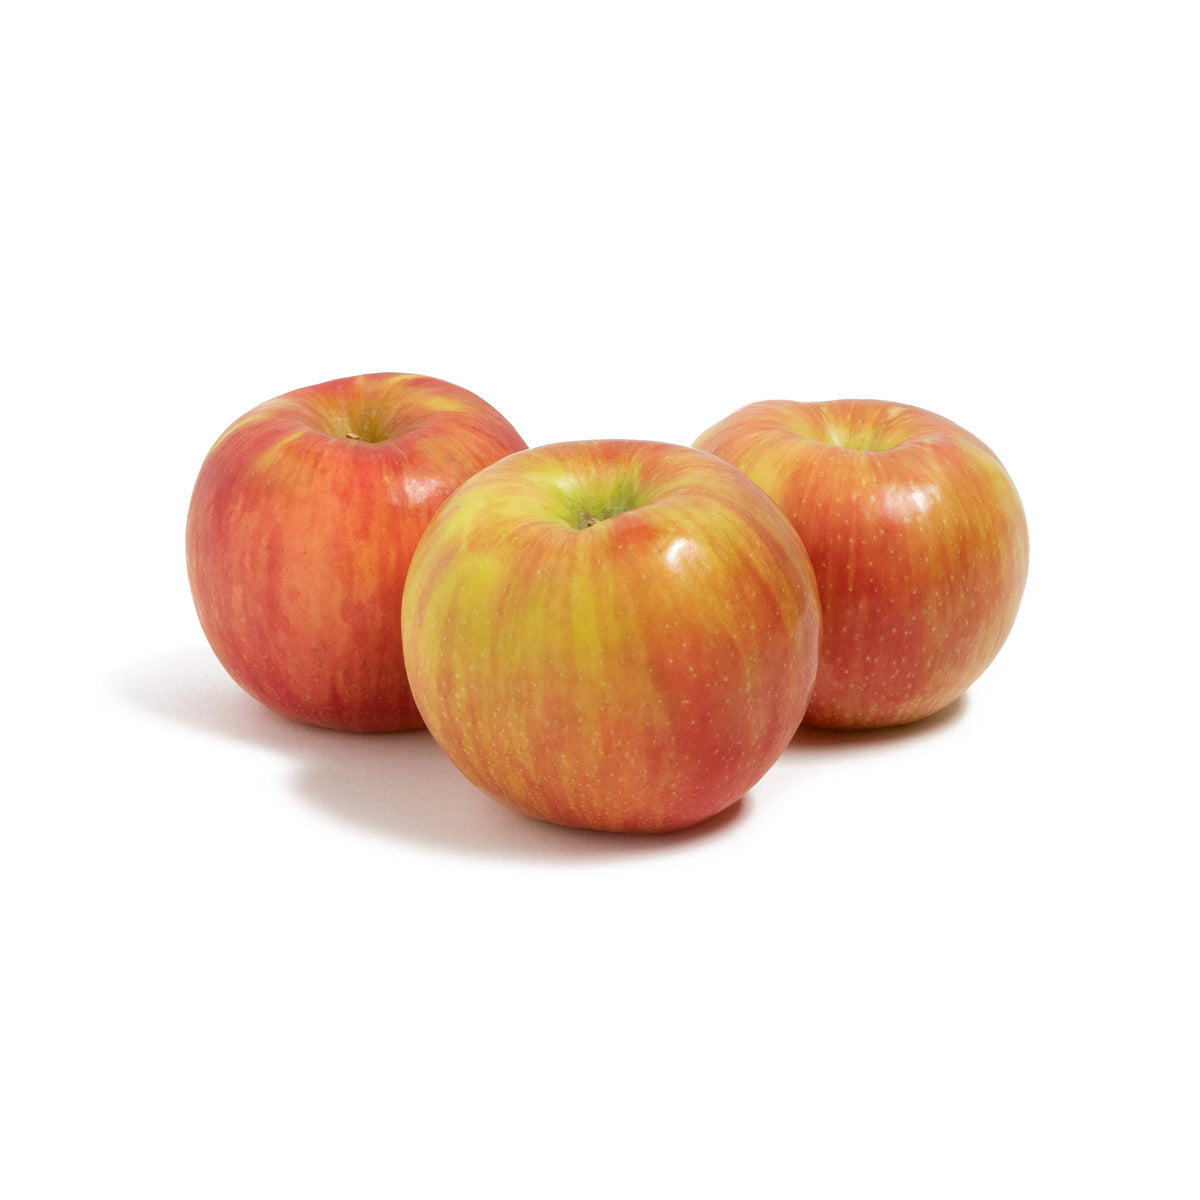 BoxNCase Honeycrisp Apples 2 lb